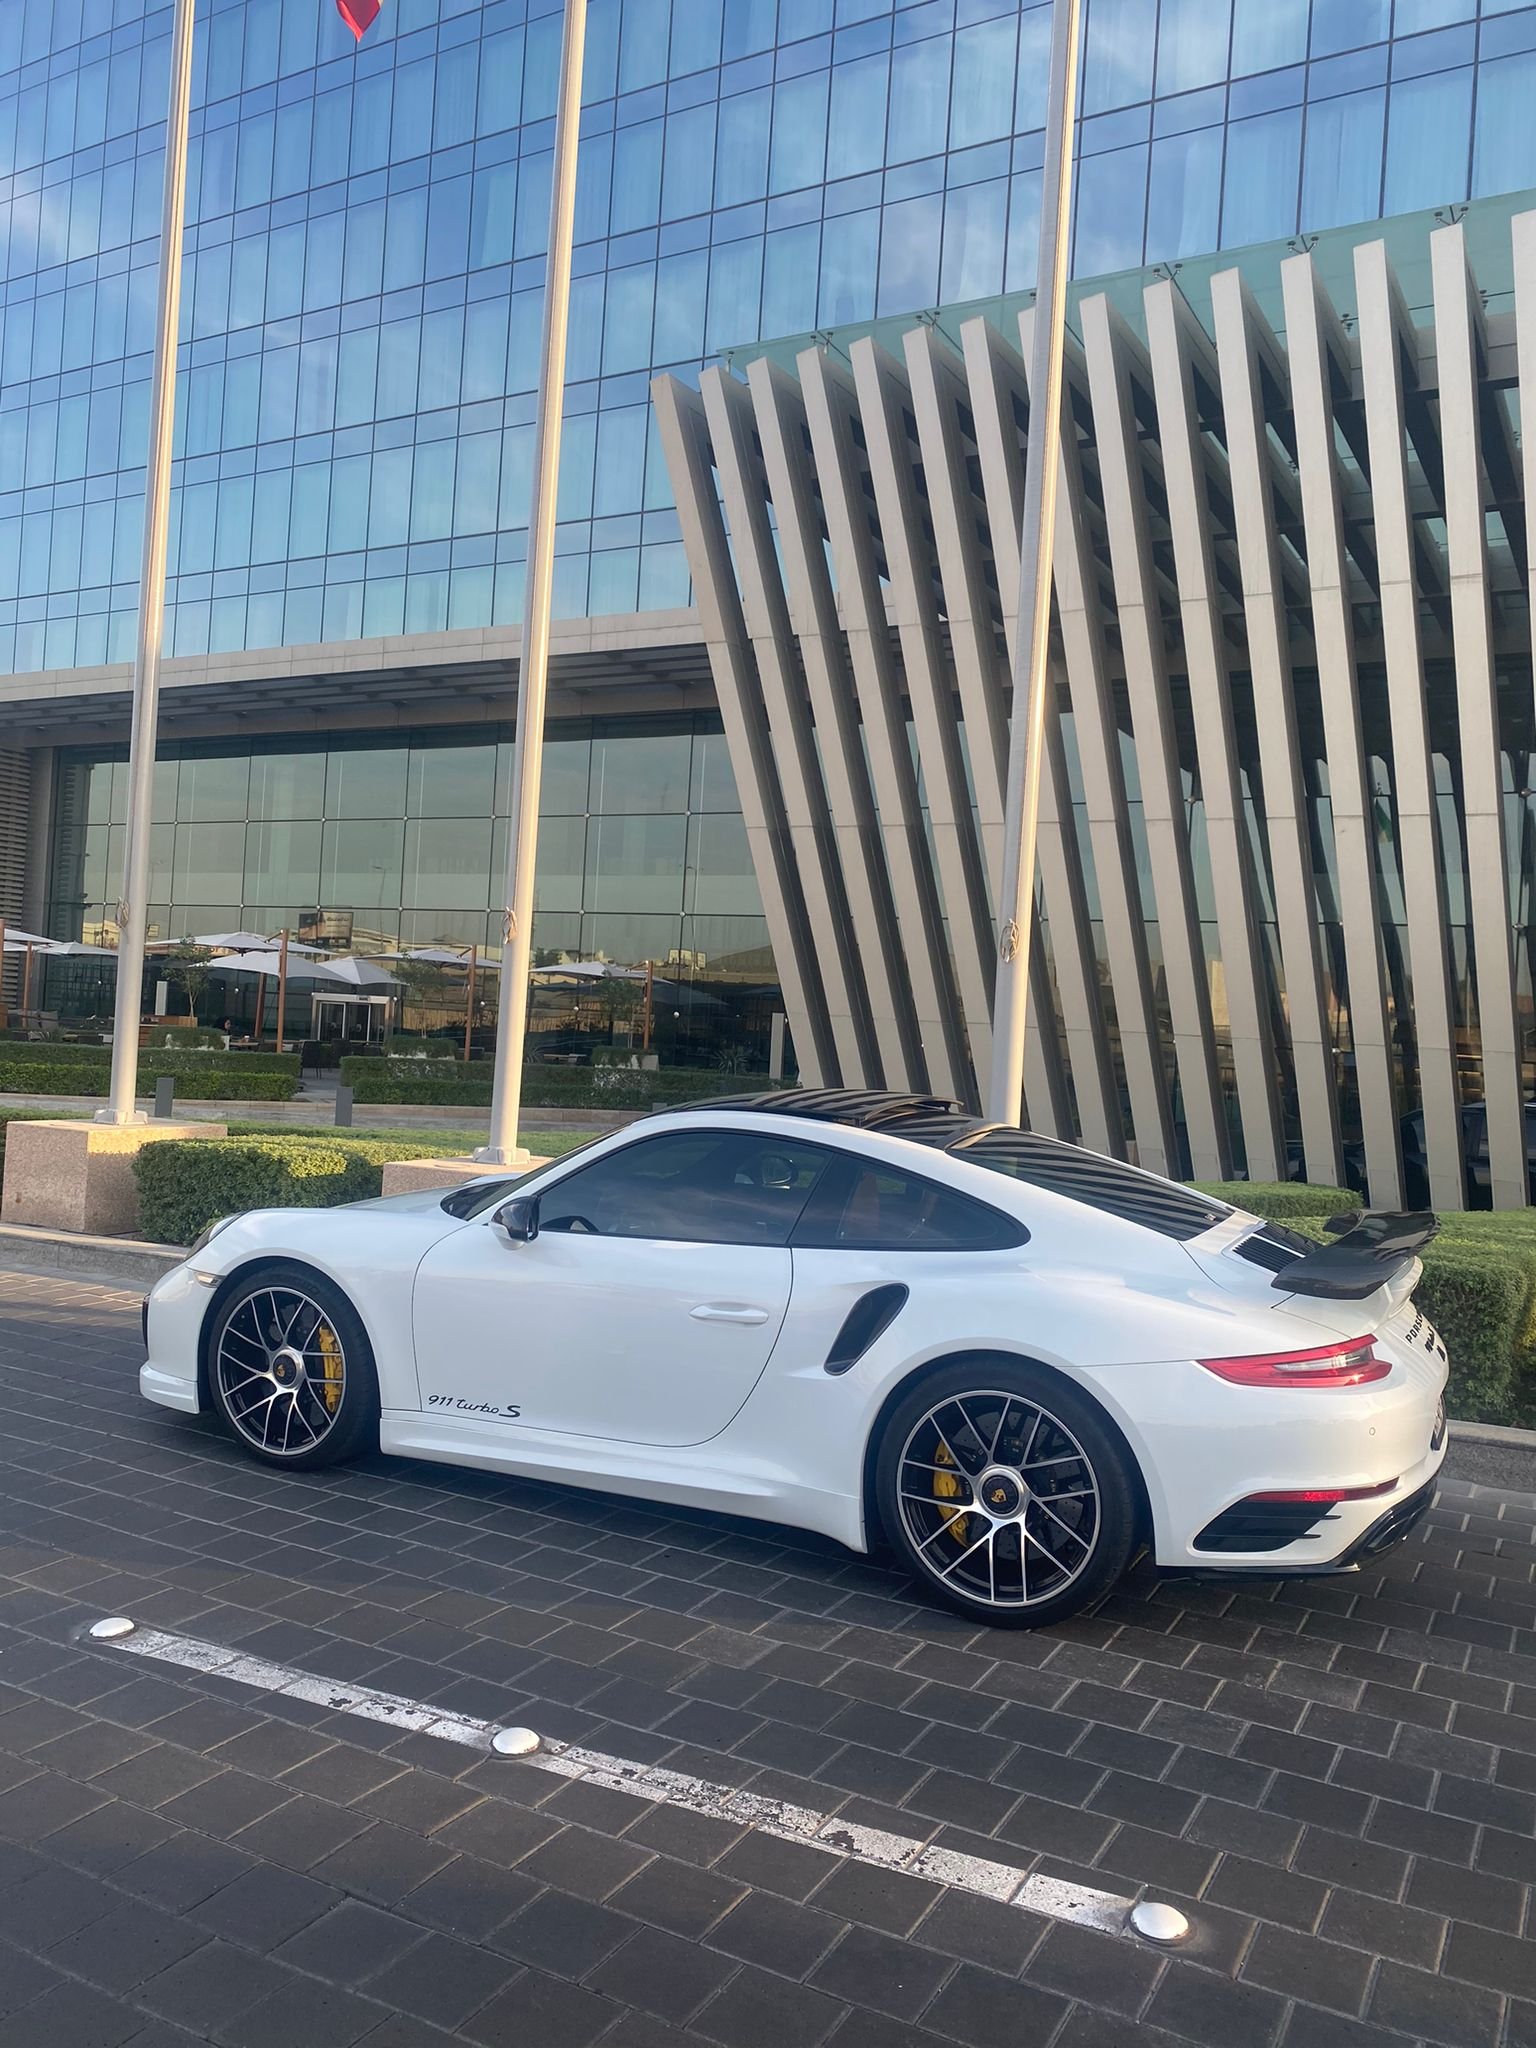 Porsche 911 turbo s 2017 بورشه ٩١١ تيربو اس ٢٠١٧1.jpeg